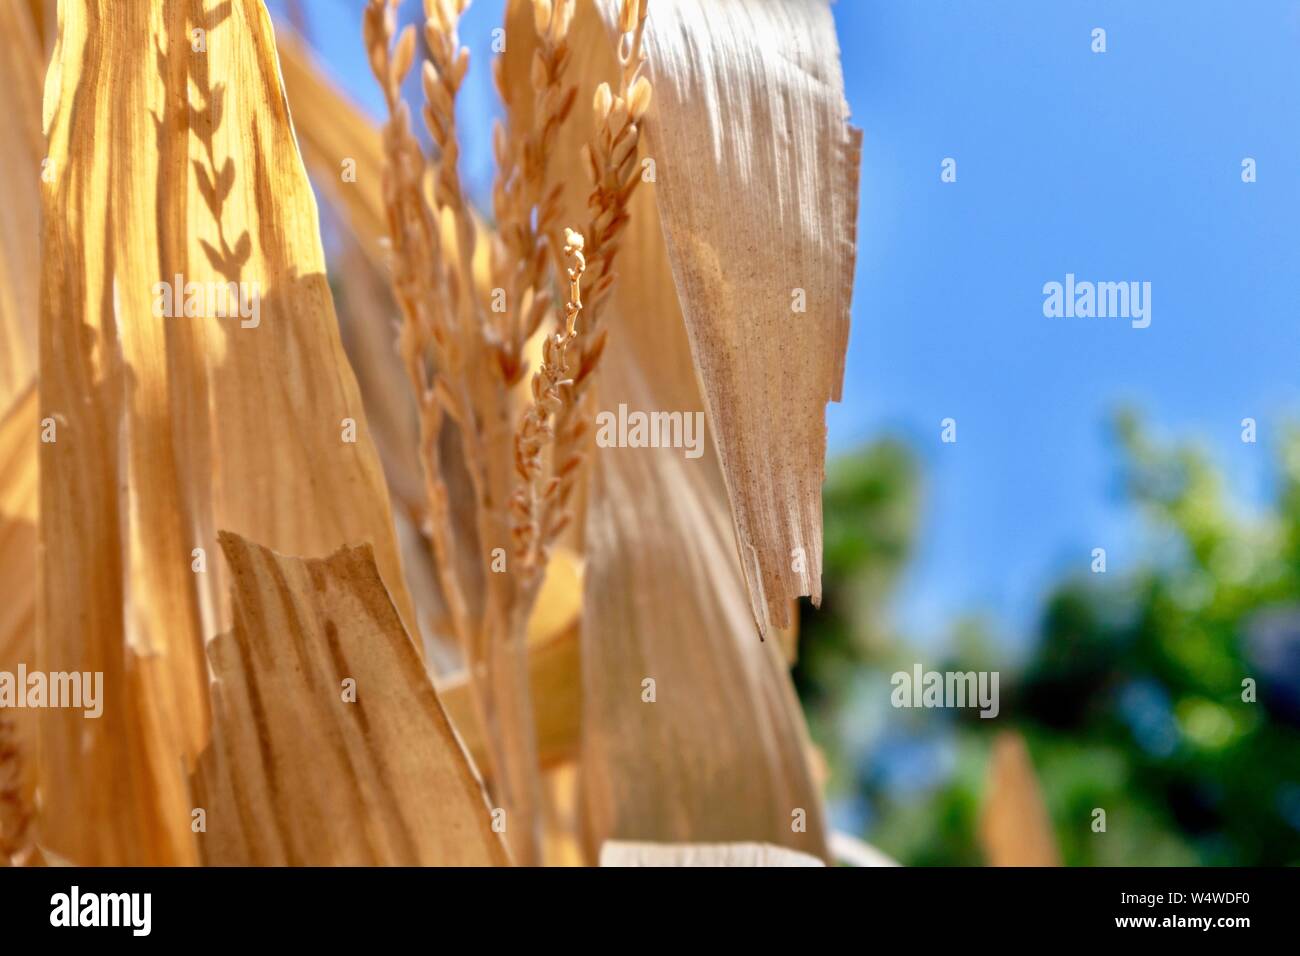 dried corn stalks against blue sky Stock Photo